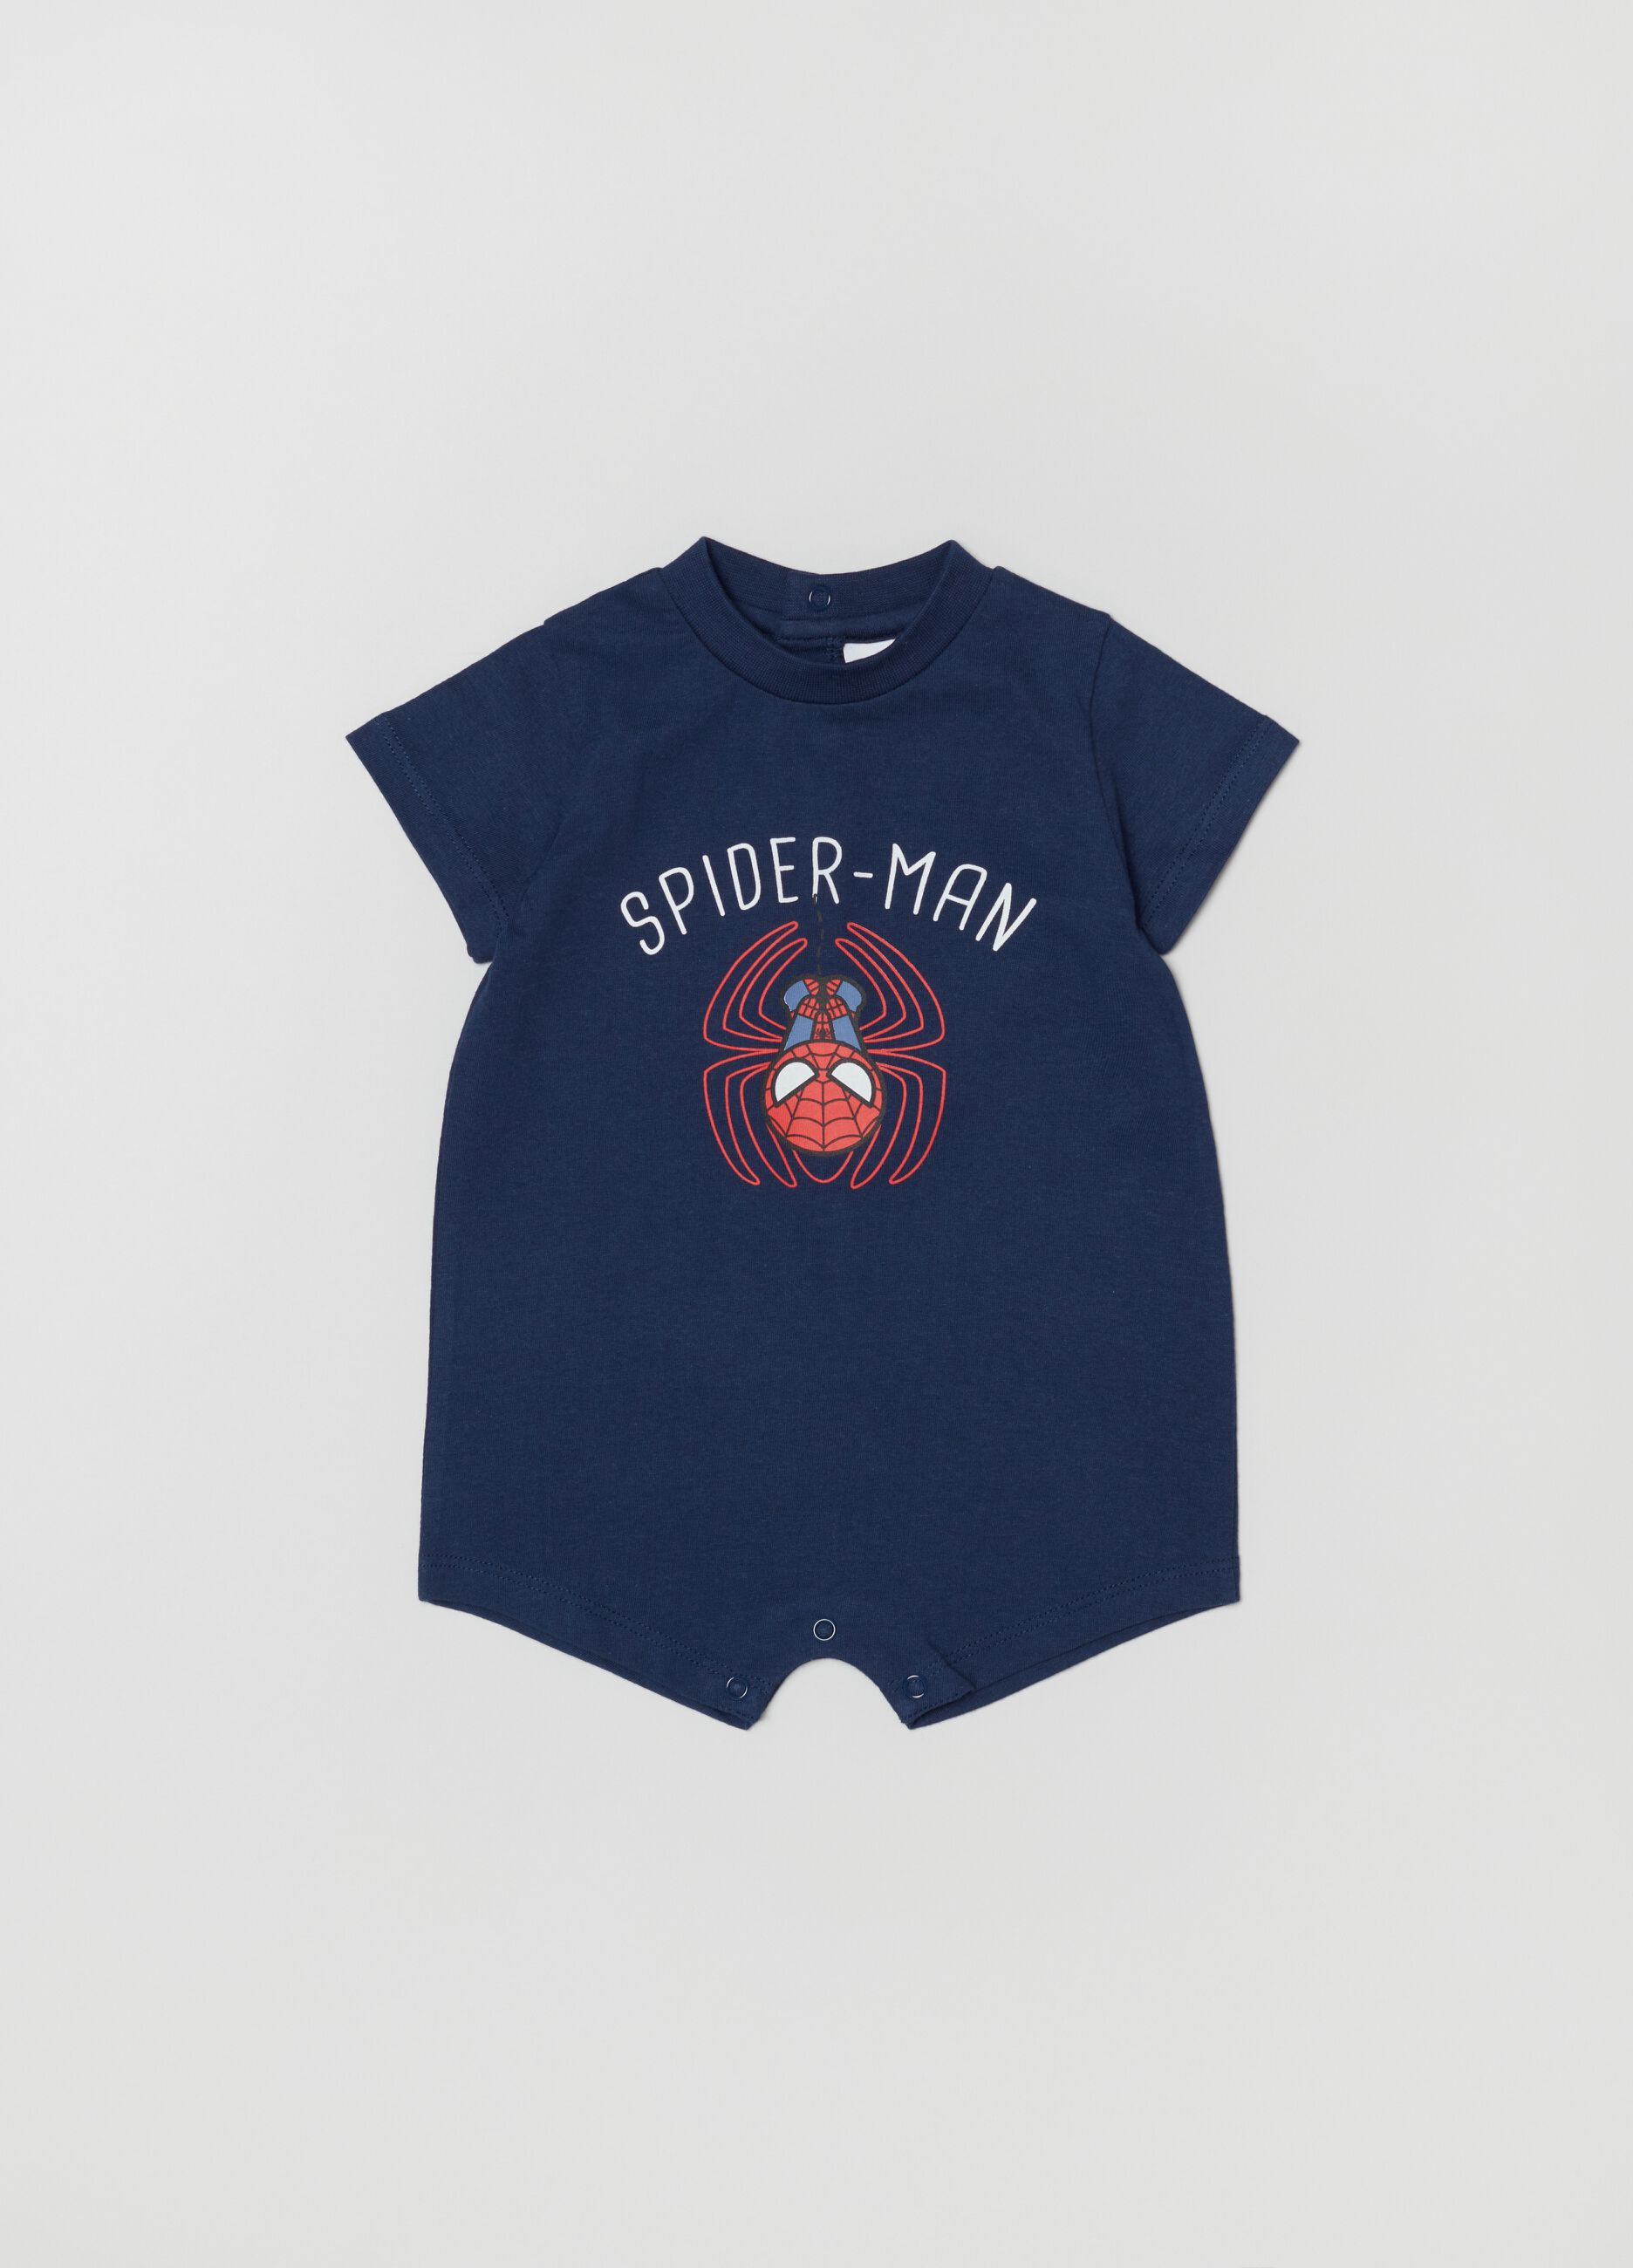 Pyjama romper suit with Spider-Man print